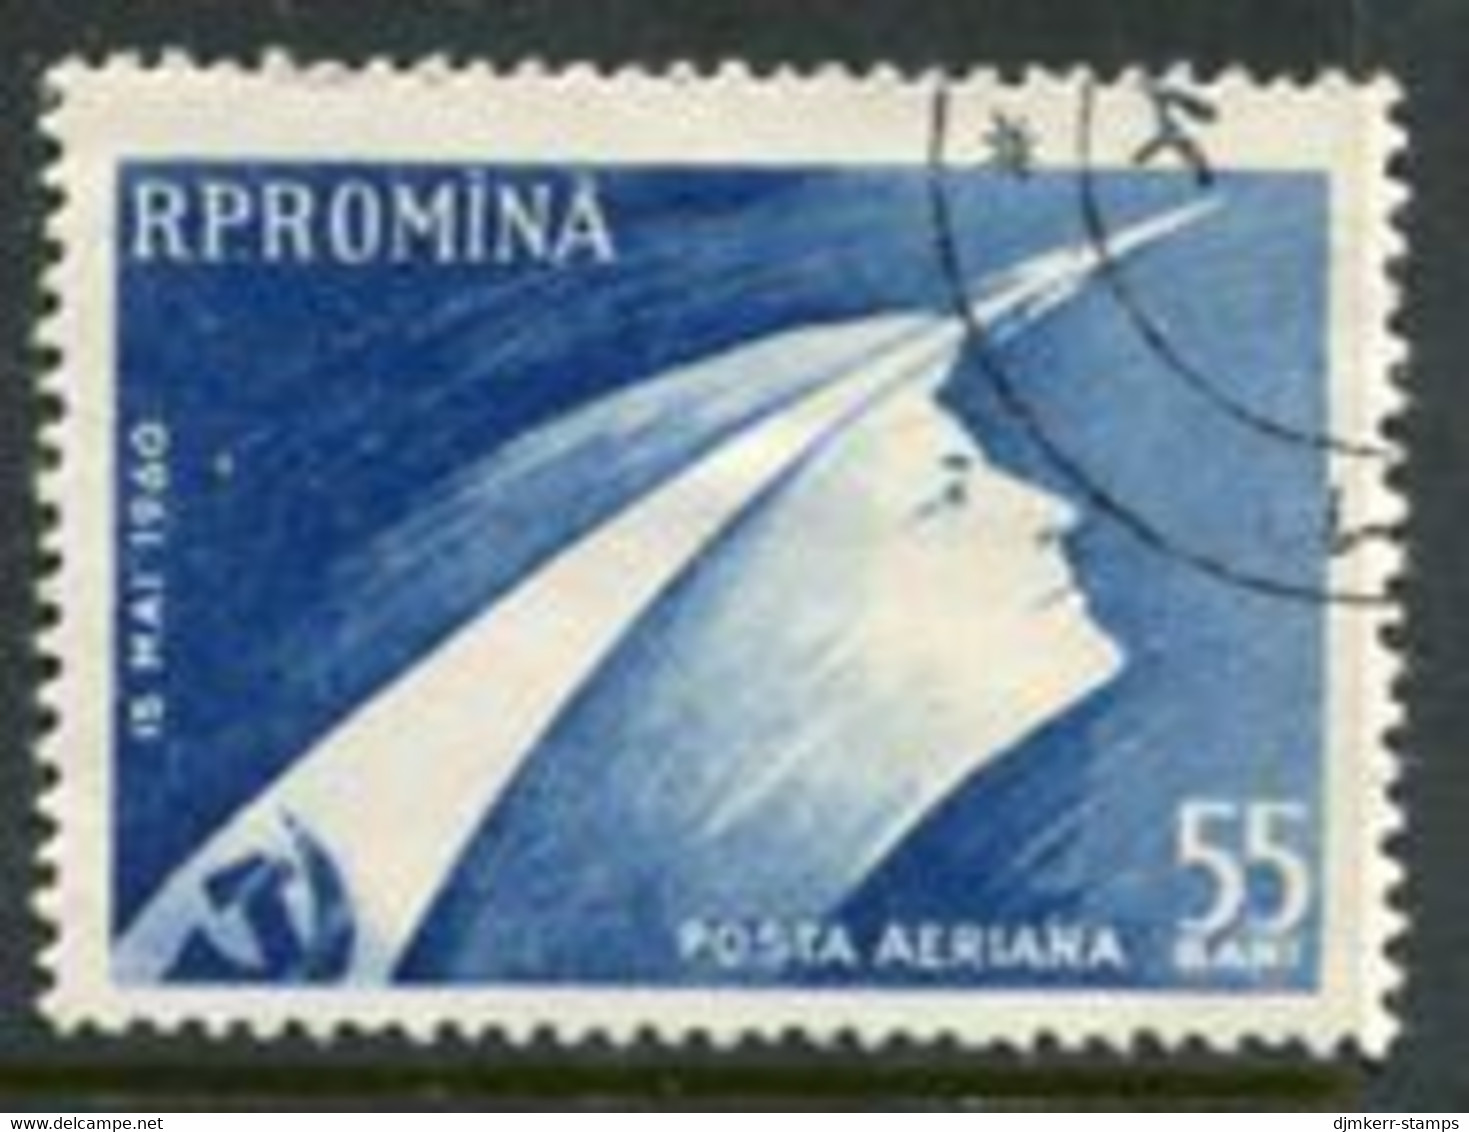 ROMANIA 1960 Launch Of Vostok Spacecraft Used.  Michel 1899 - Usado